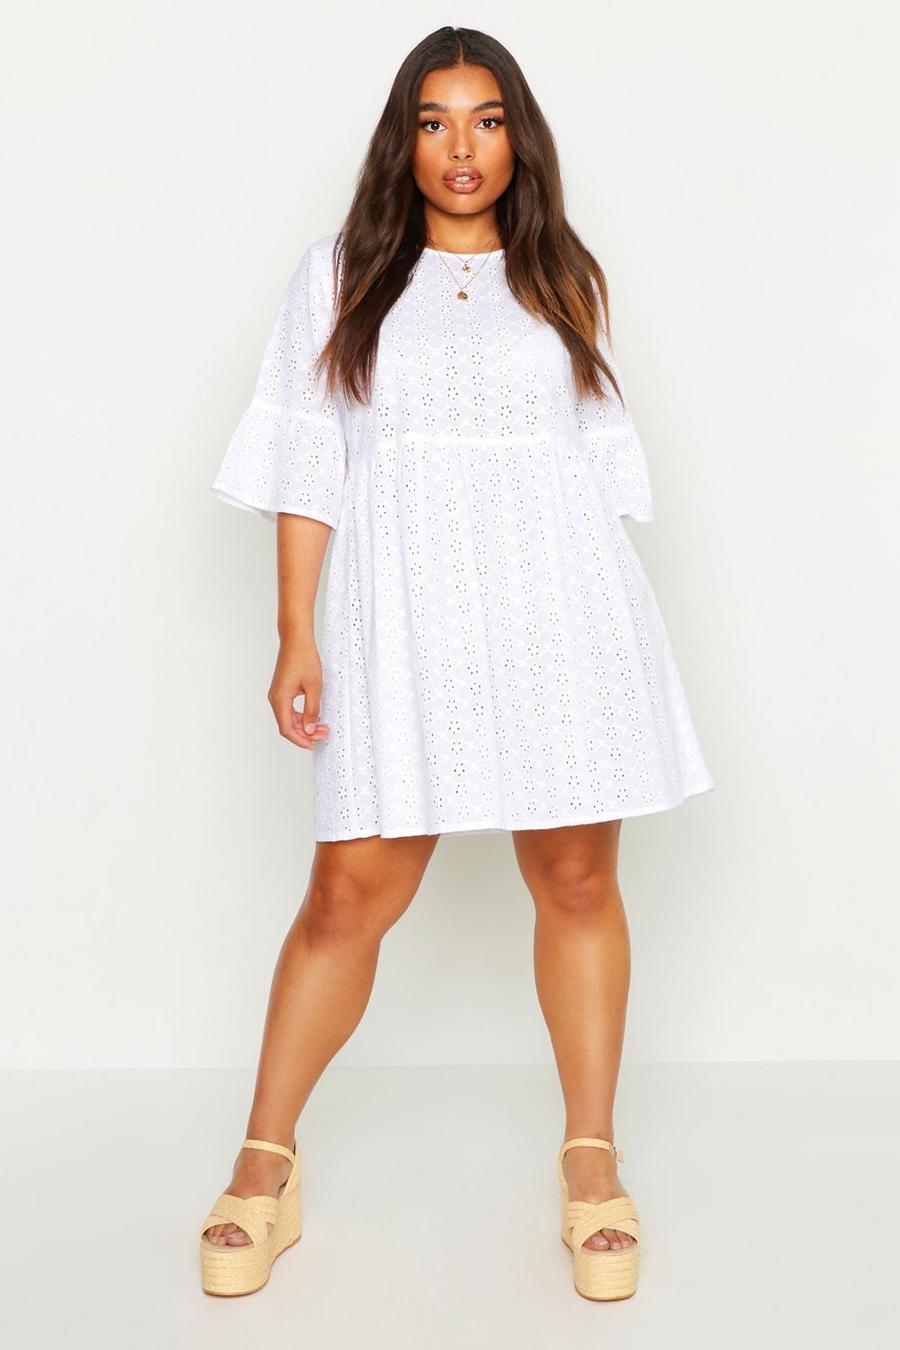 Plus Size White Dress | White Dresses for Plus Women boohoo